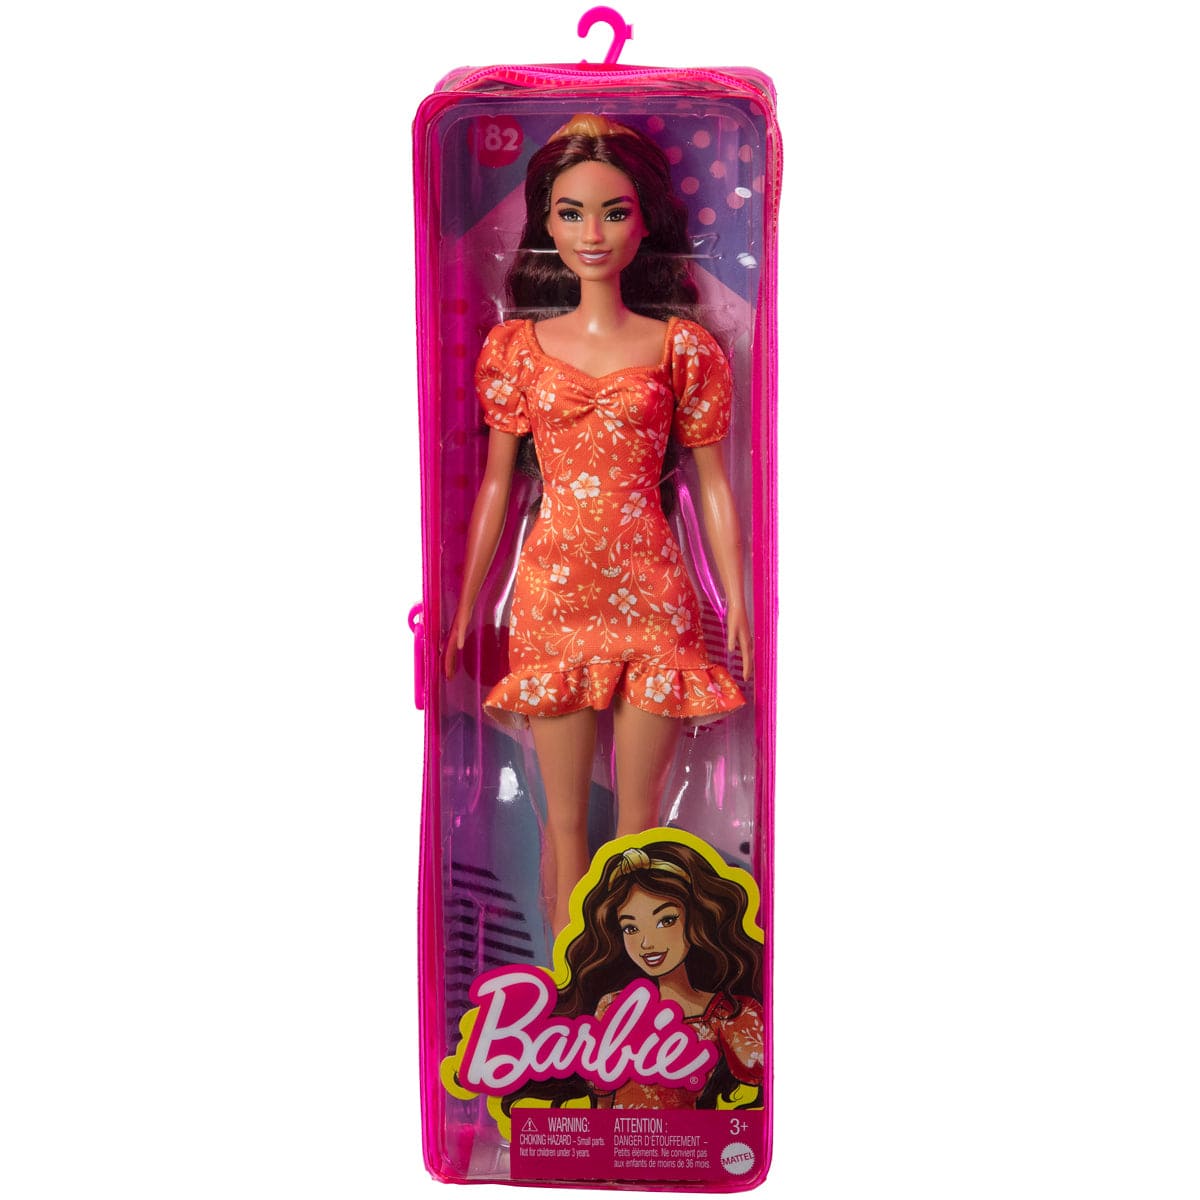 Barbie Fashionistas Doll - Brunette Hair and Orange Floral Print Dress